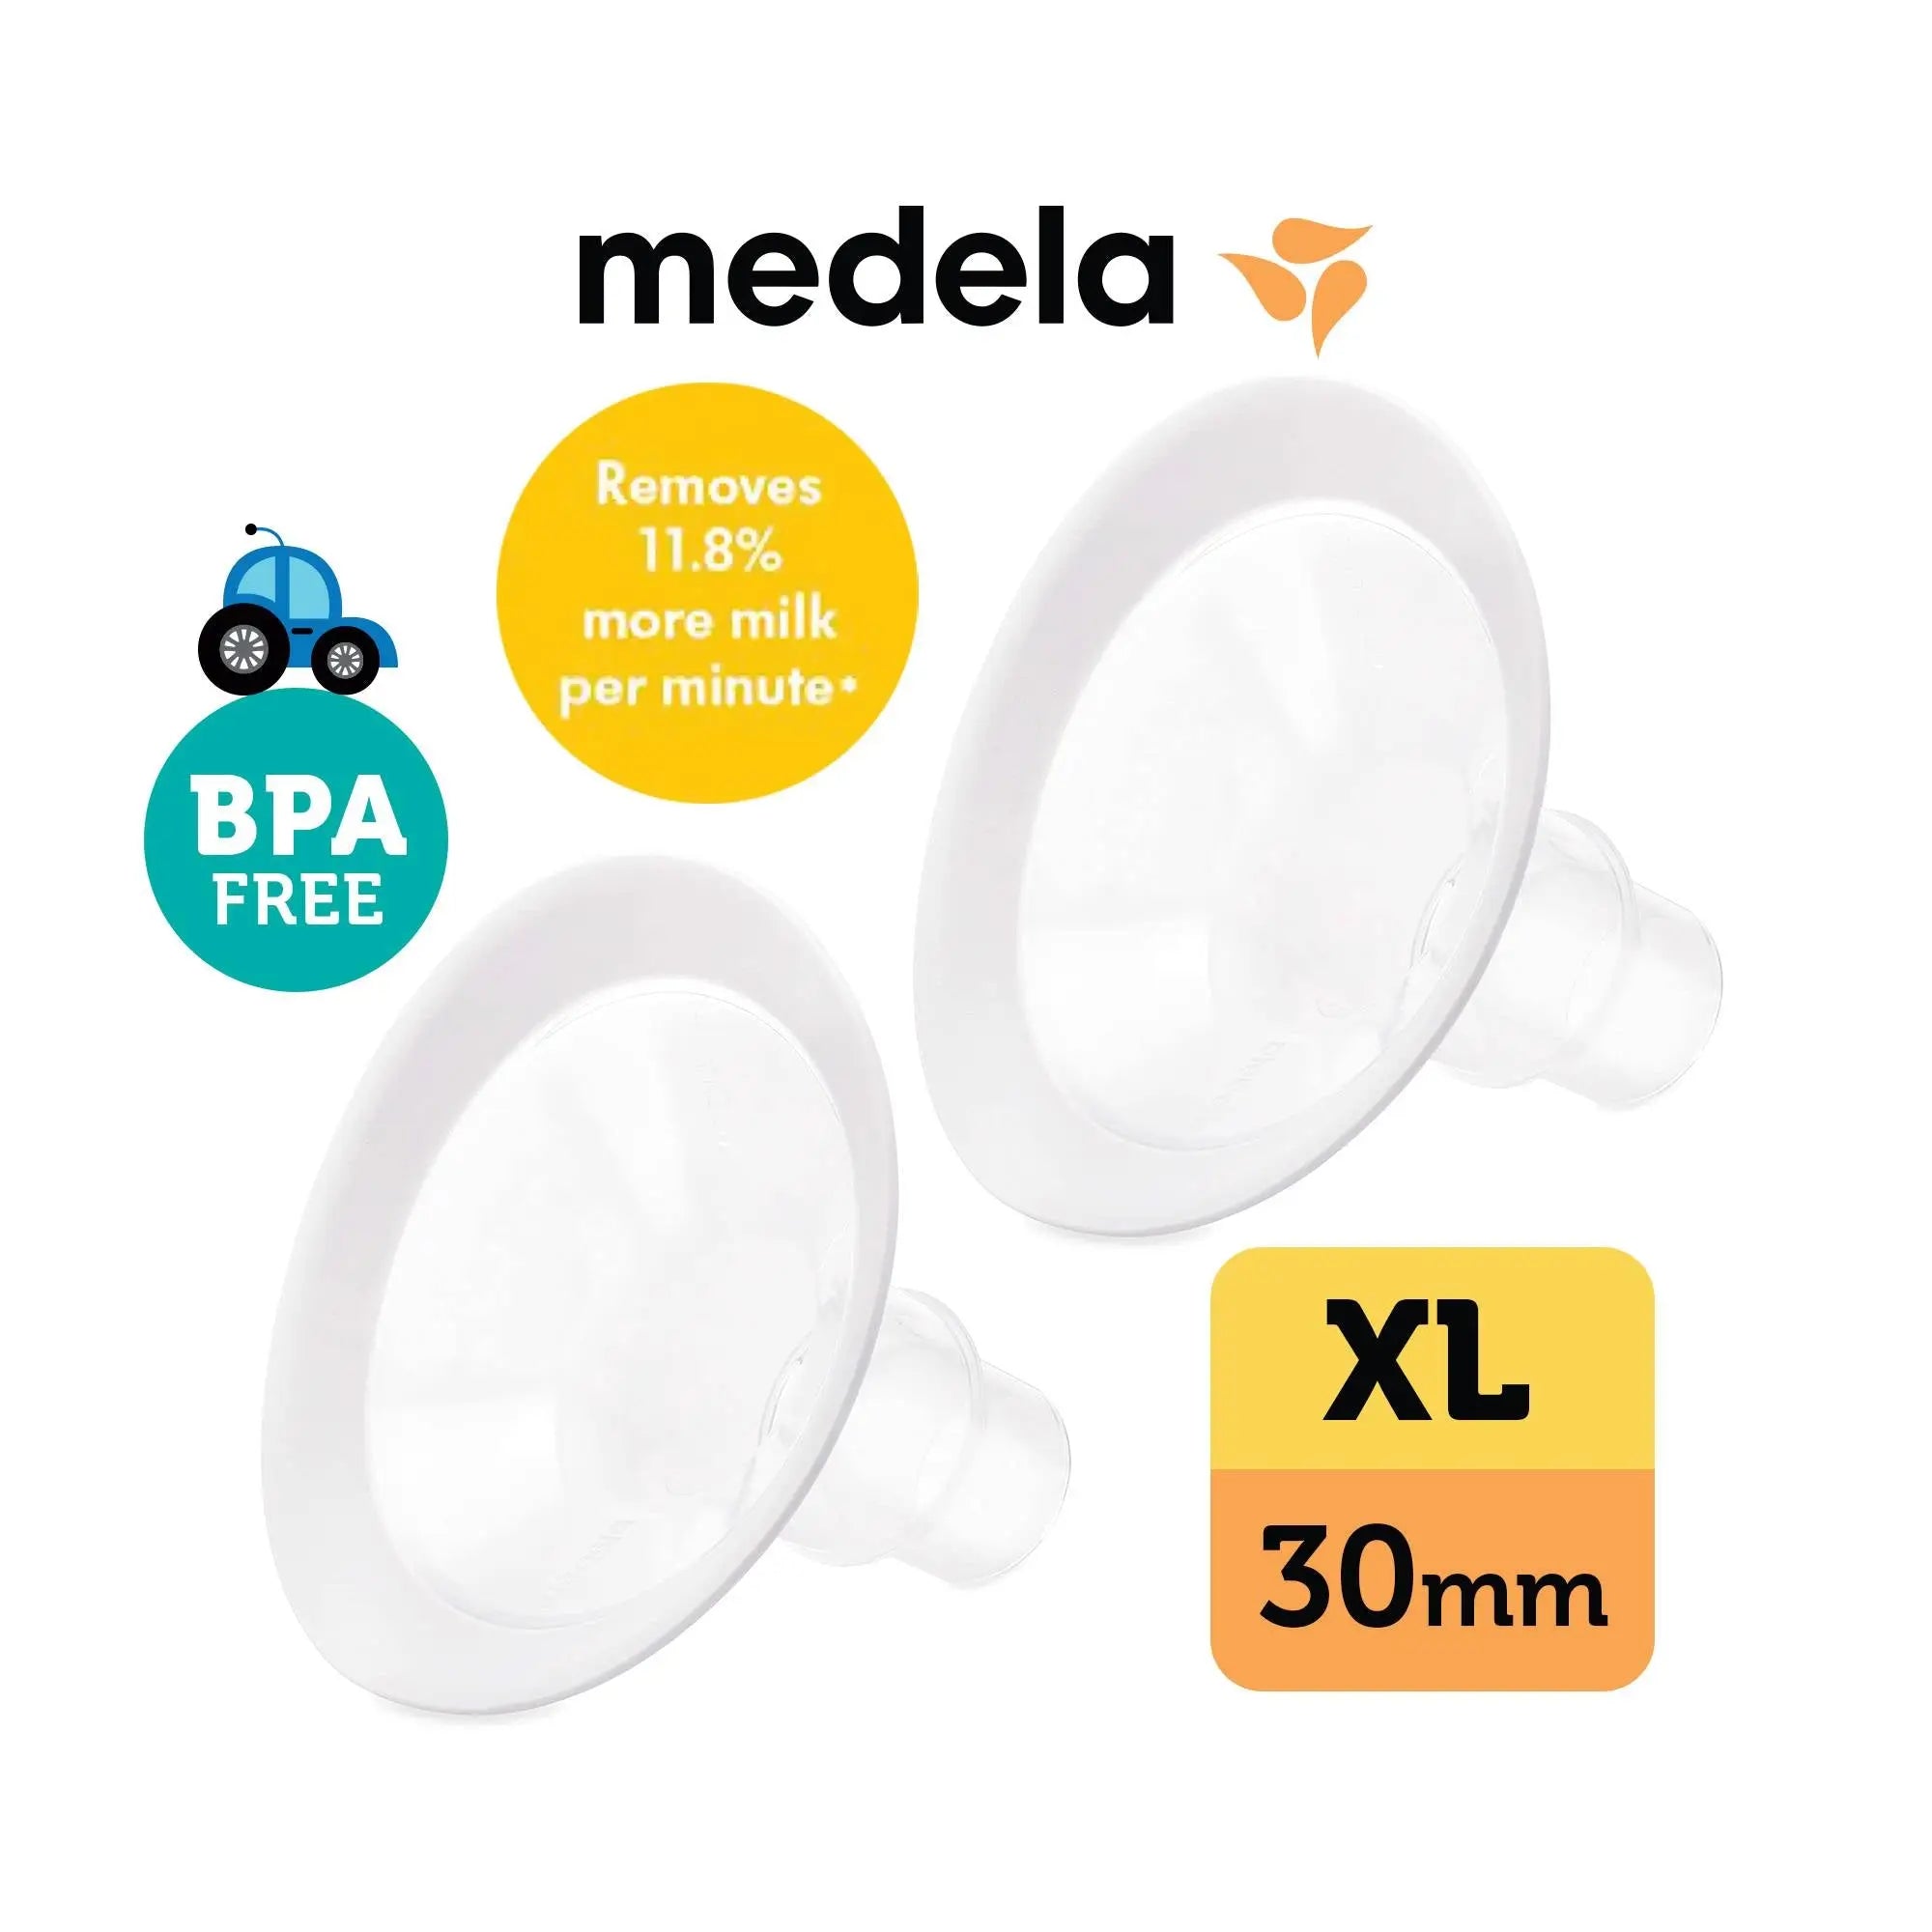 Medela - NEW PersonalFit Flex Breast Shield (Pack of 2) - XL